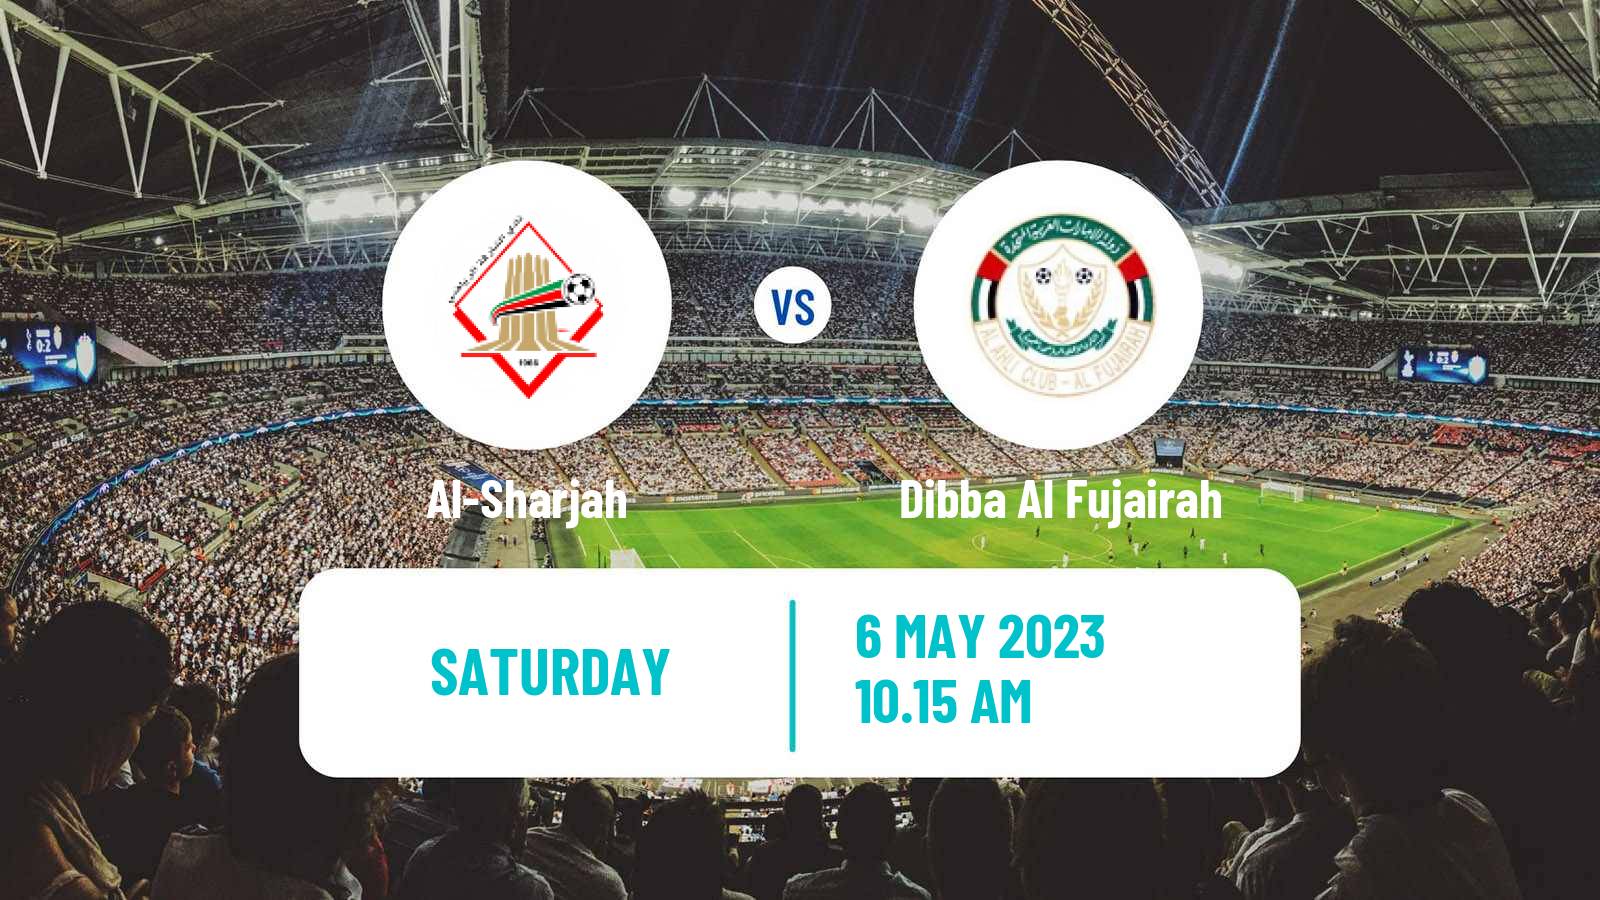 Soccer UAE Football League Al-Sharjah - Dibba Al Fujairah